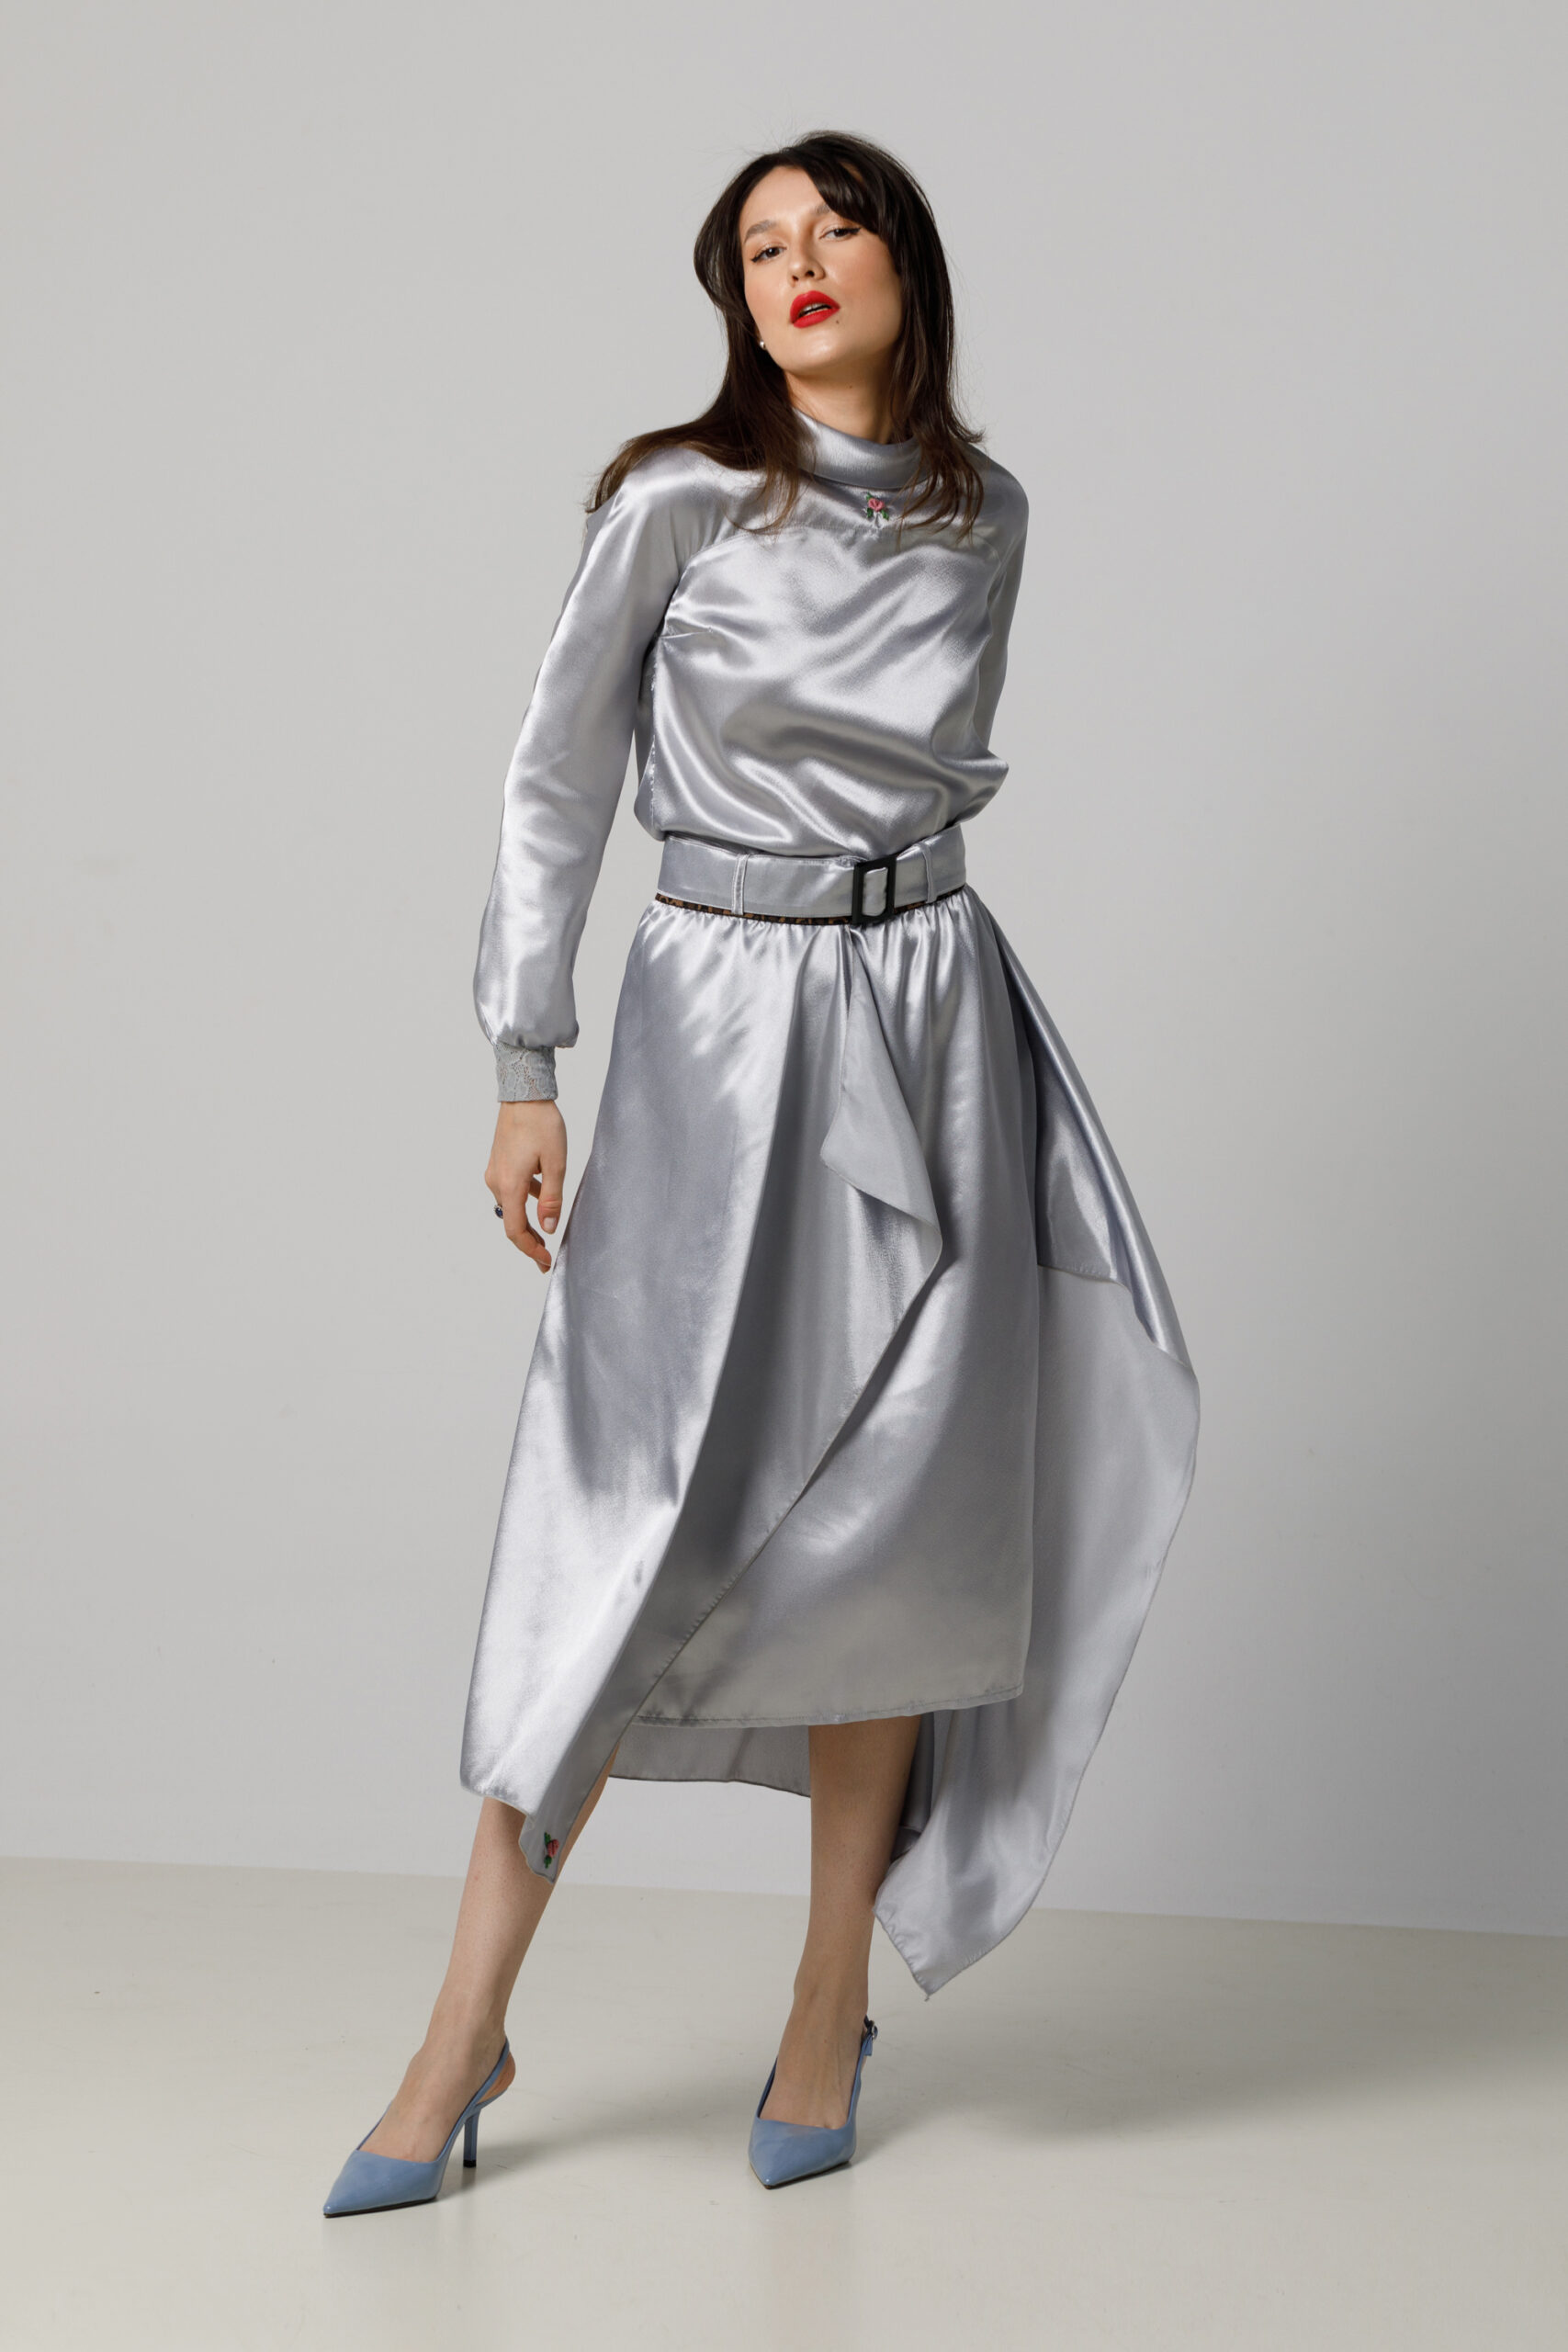 BETH casual silver satin skirt. Natural fabrics, original design, handmade embroidery